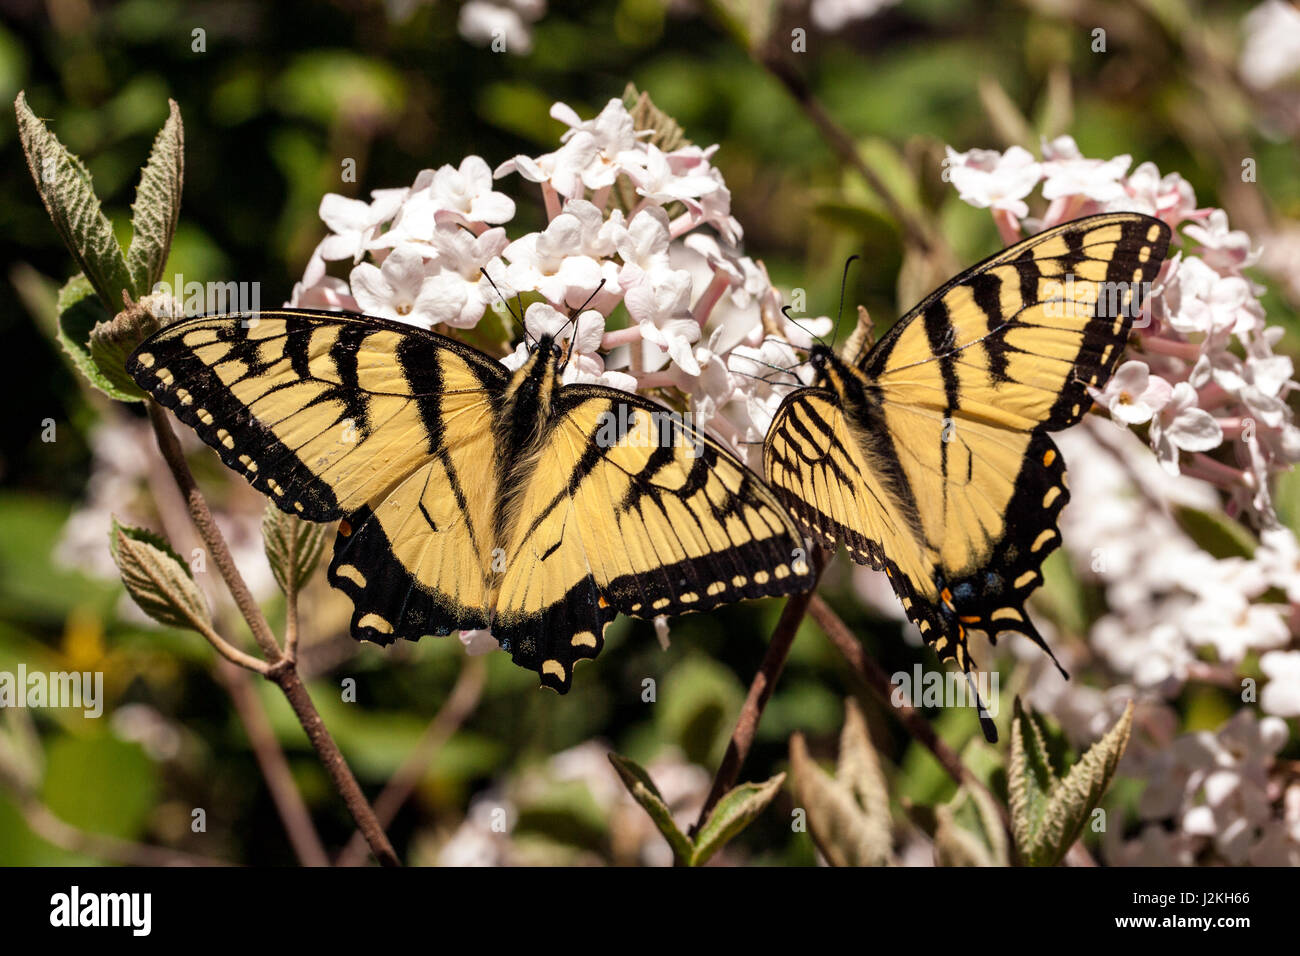 Orientale a coda di rondine di Tiger (Papilio glaucus) - Brevard, North Carolina, STATI UNITI D'AMERICA Foto Stock